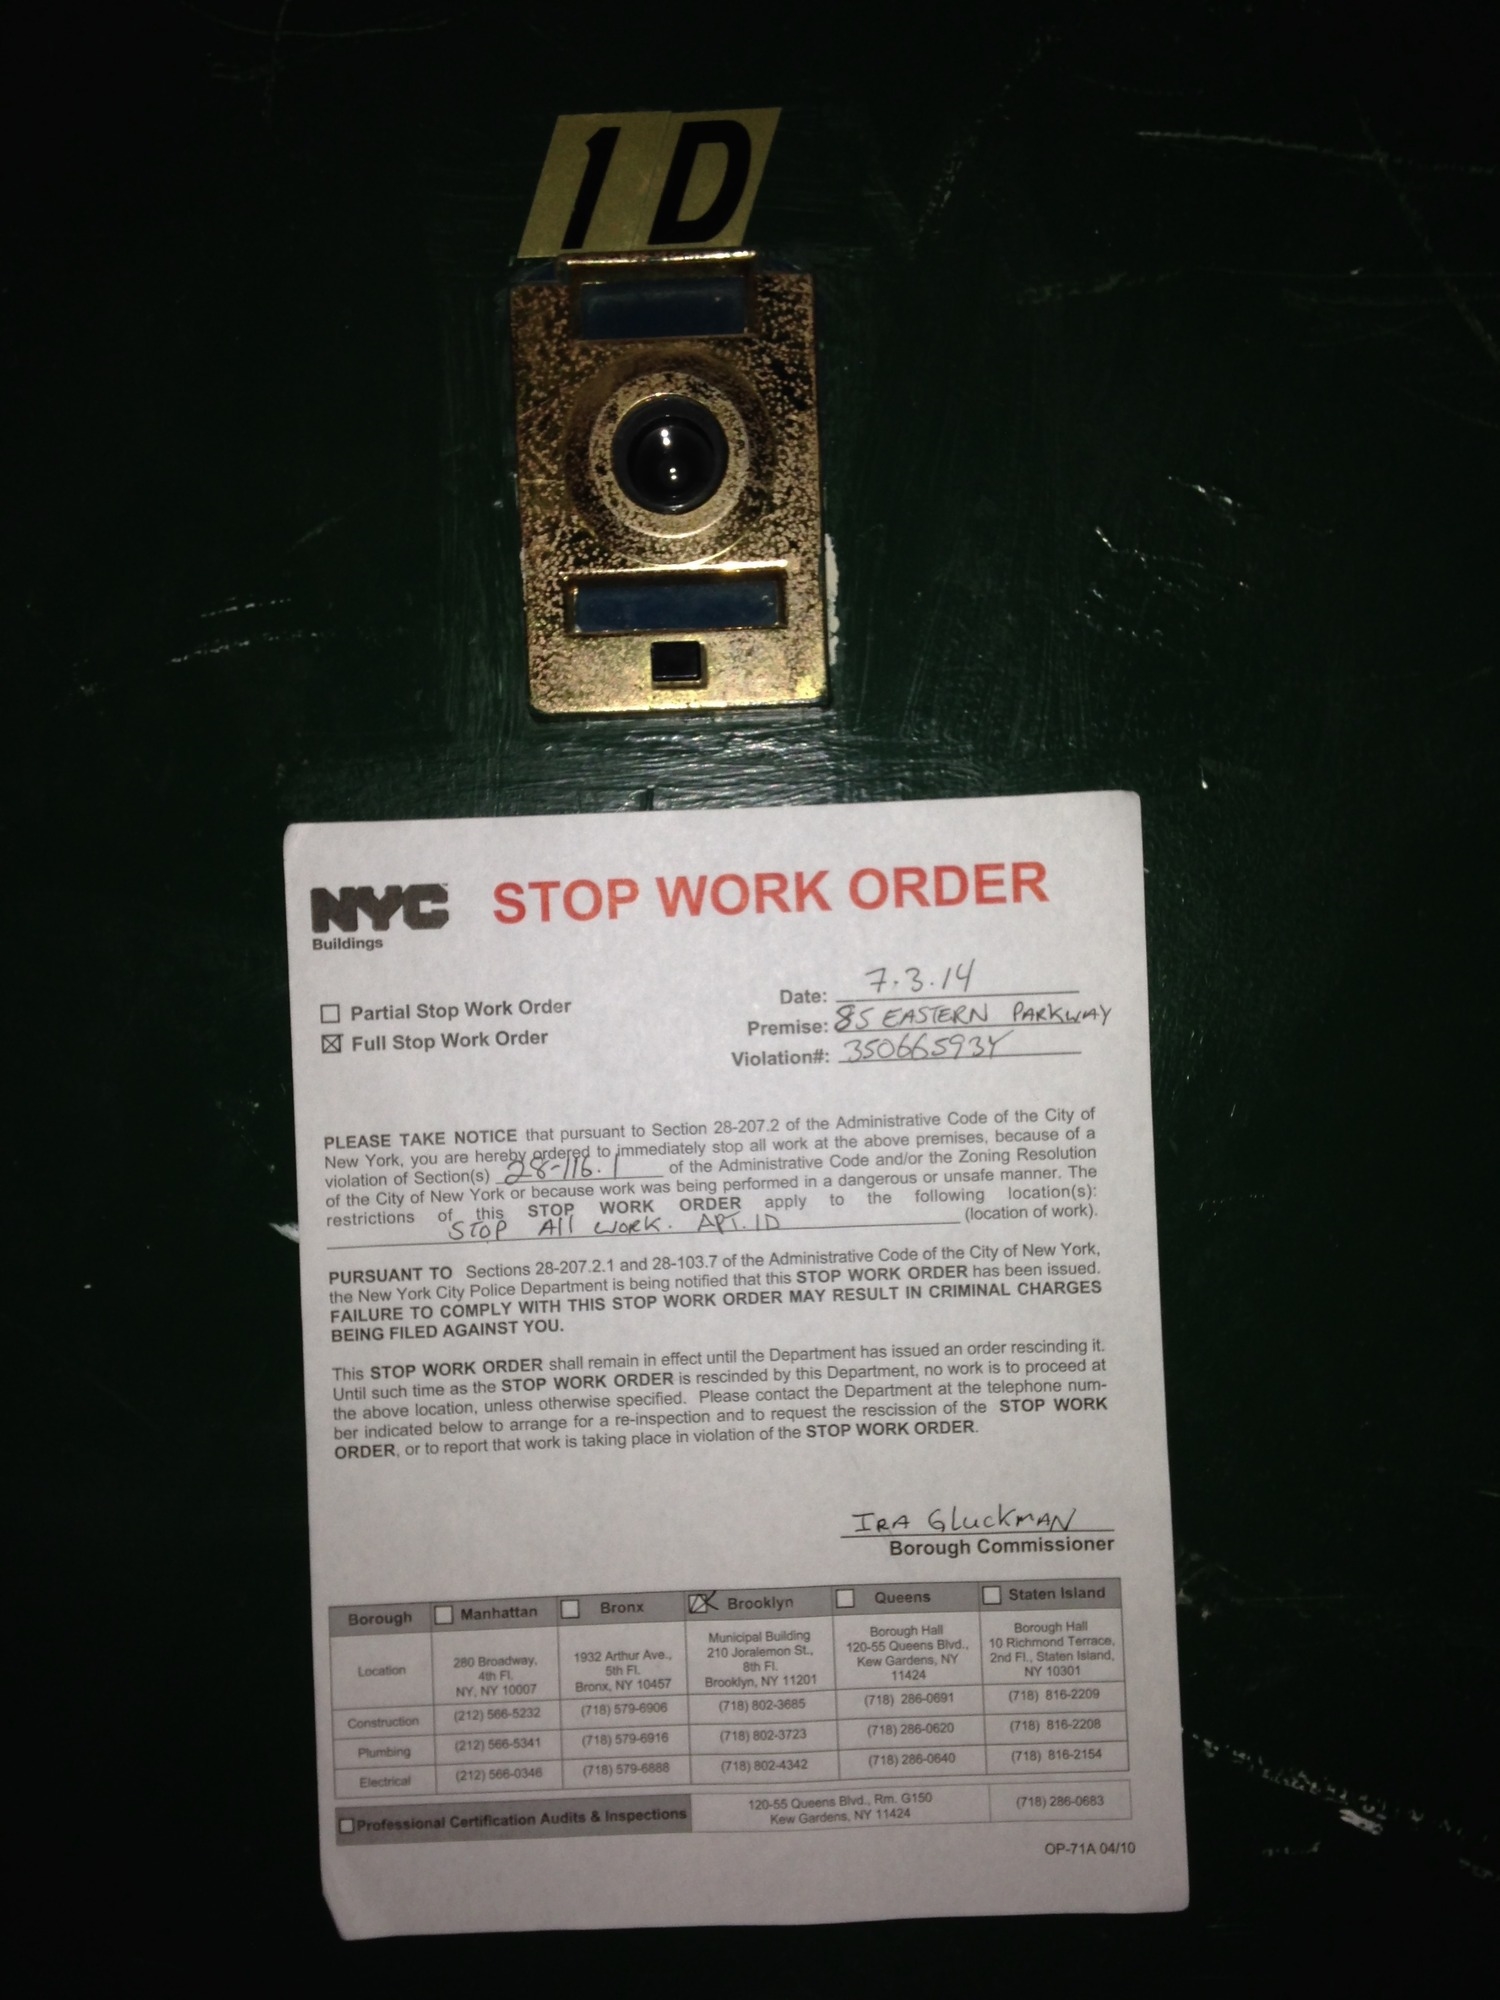 Stop work order #1D July '14